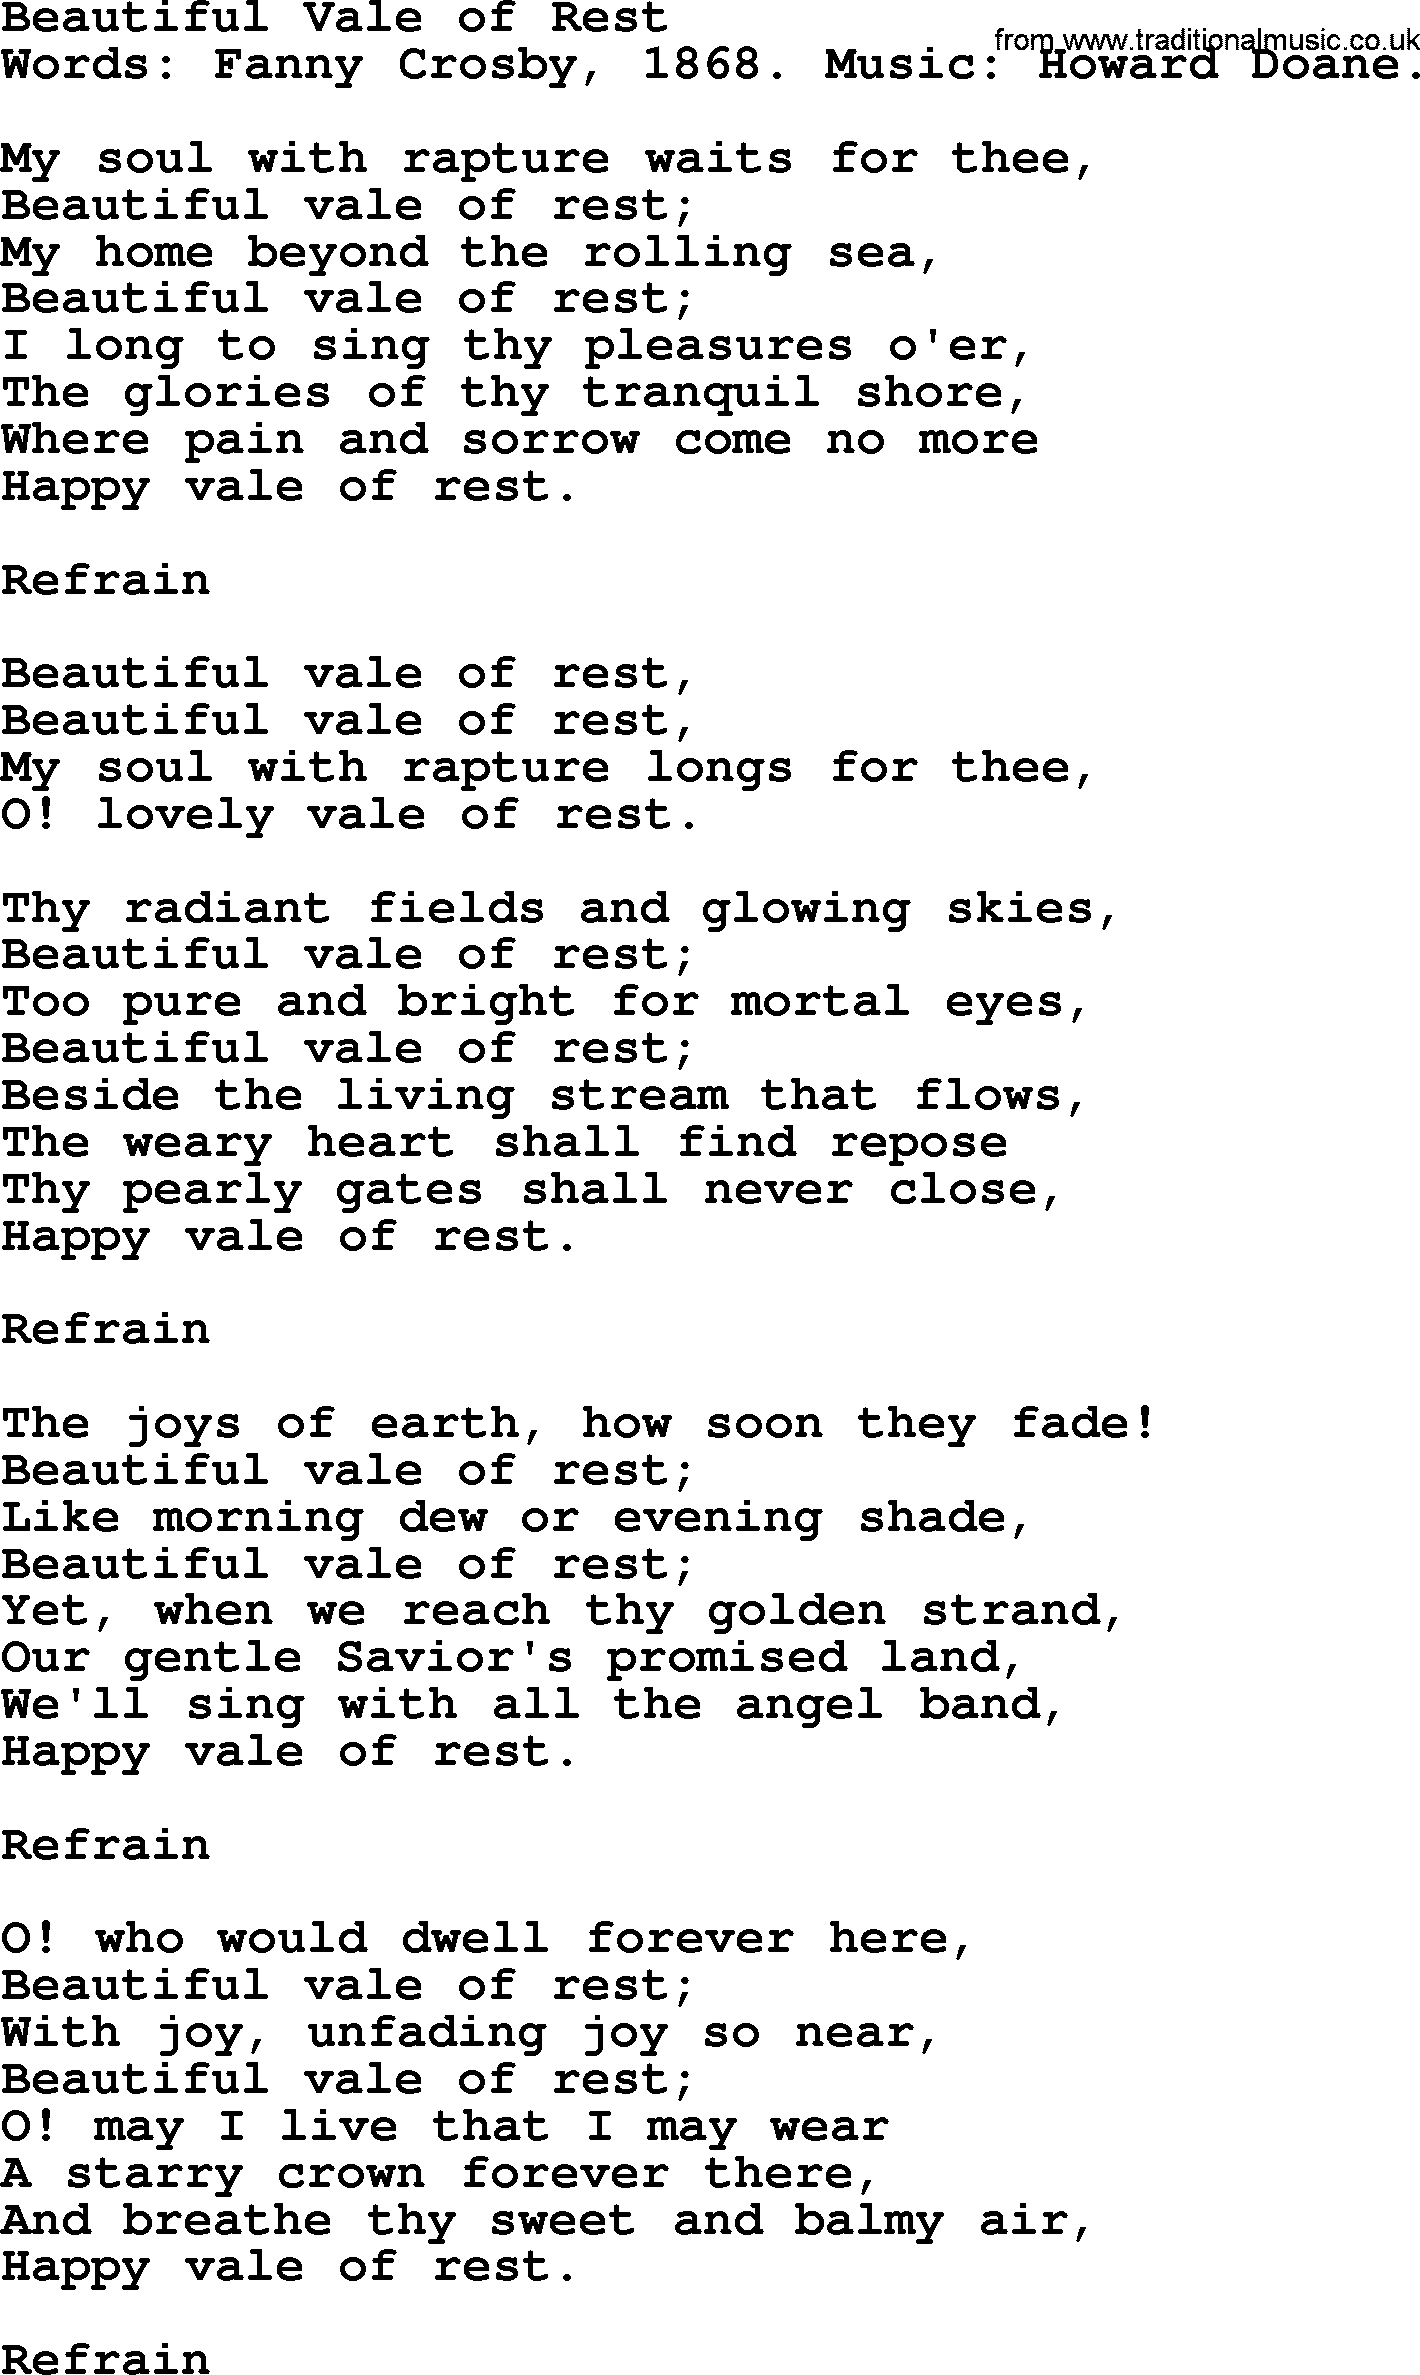 Fanny Crosby song: Beautiful Vale Of Rest, lyrics